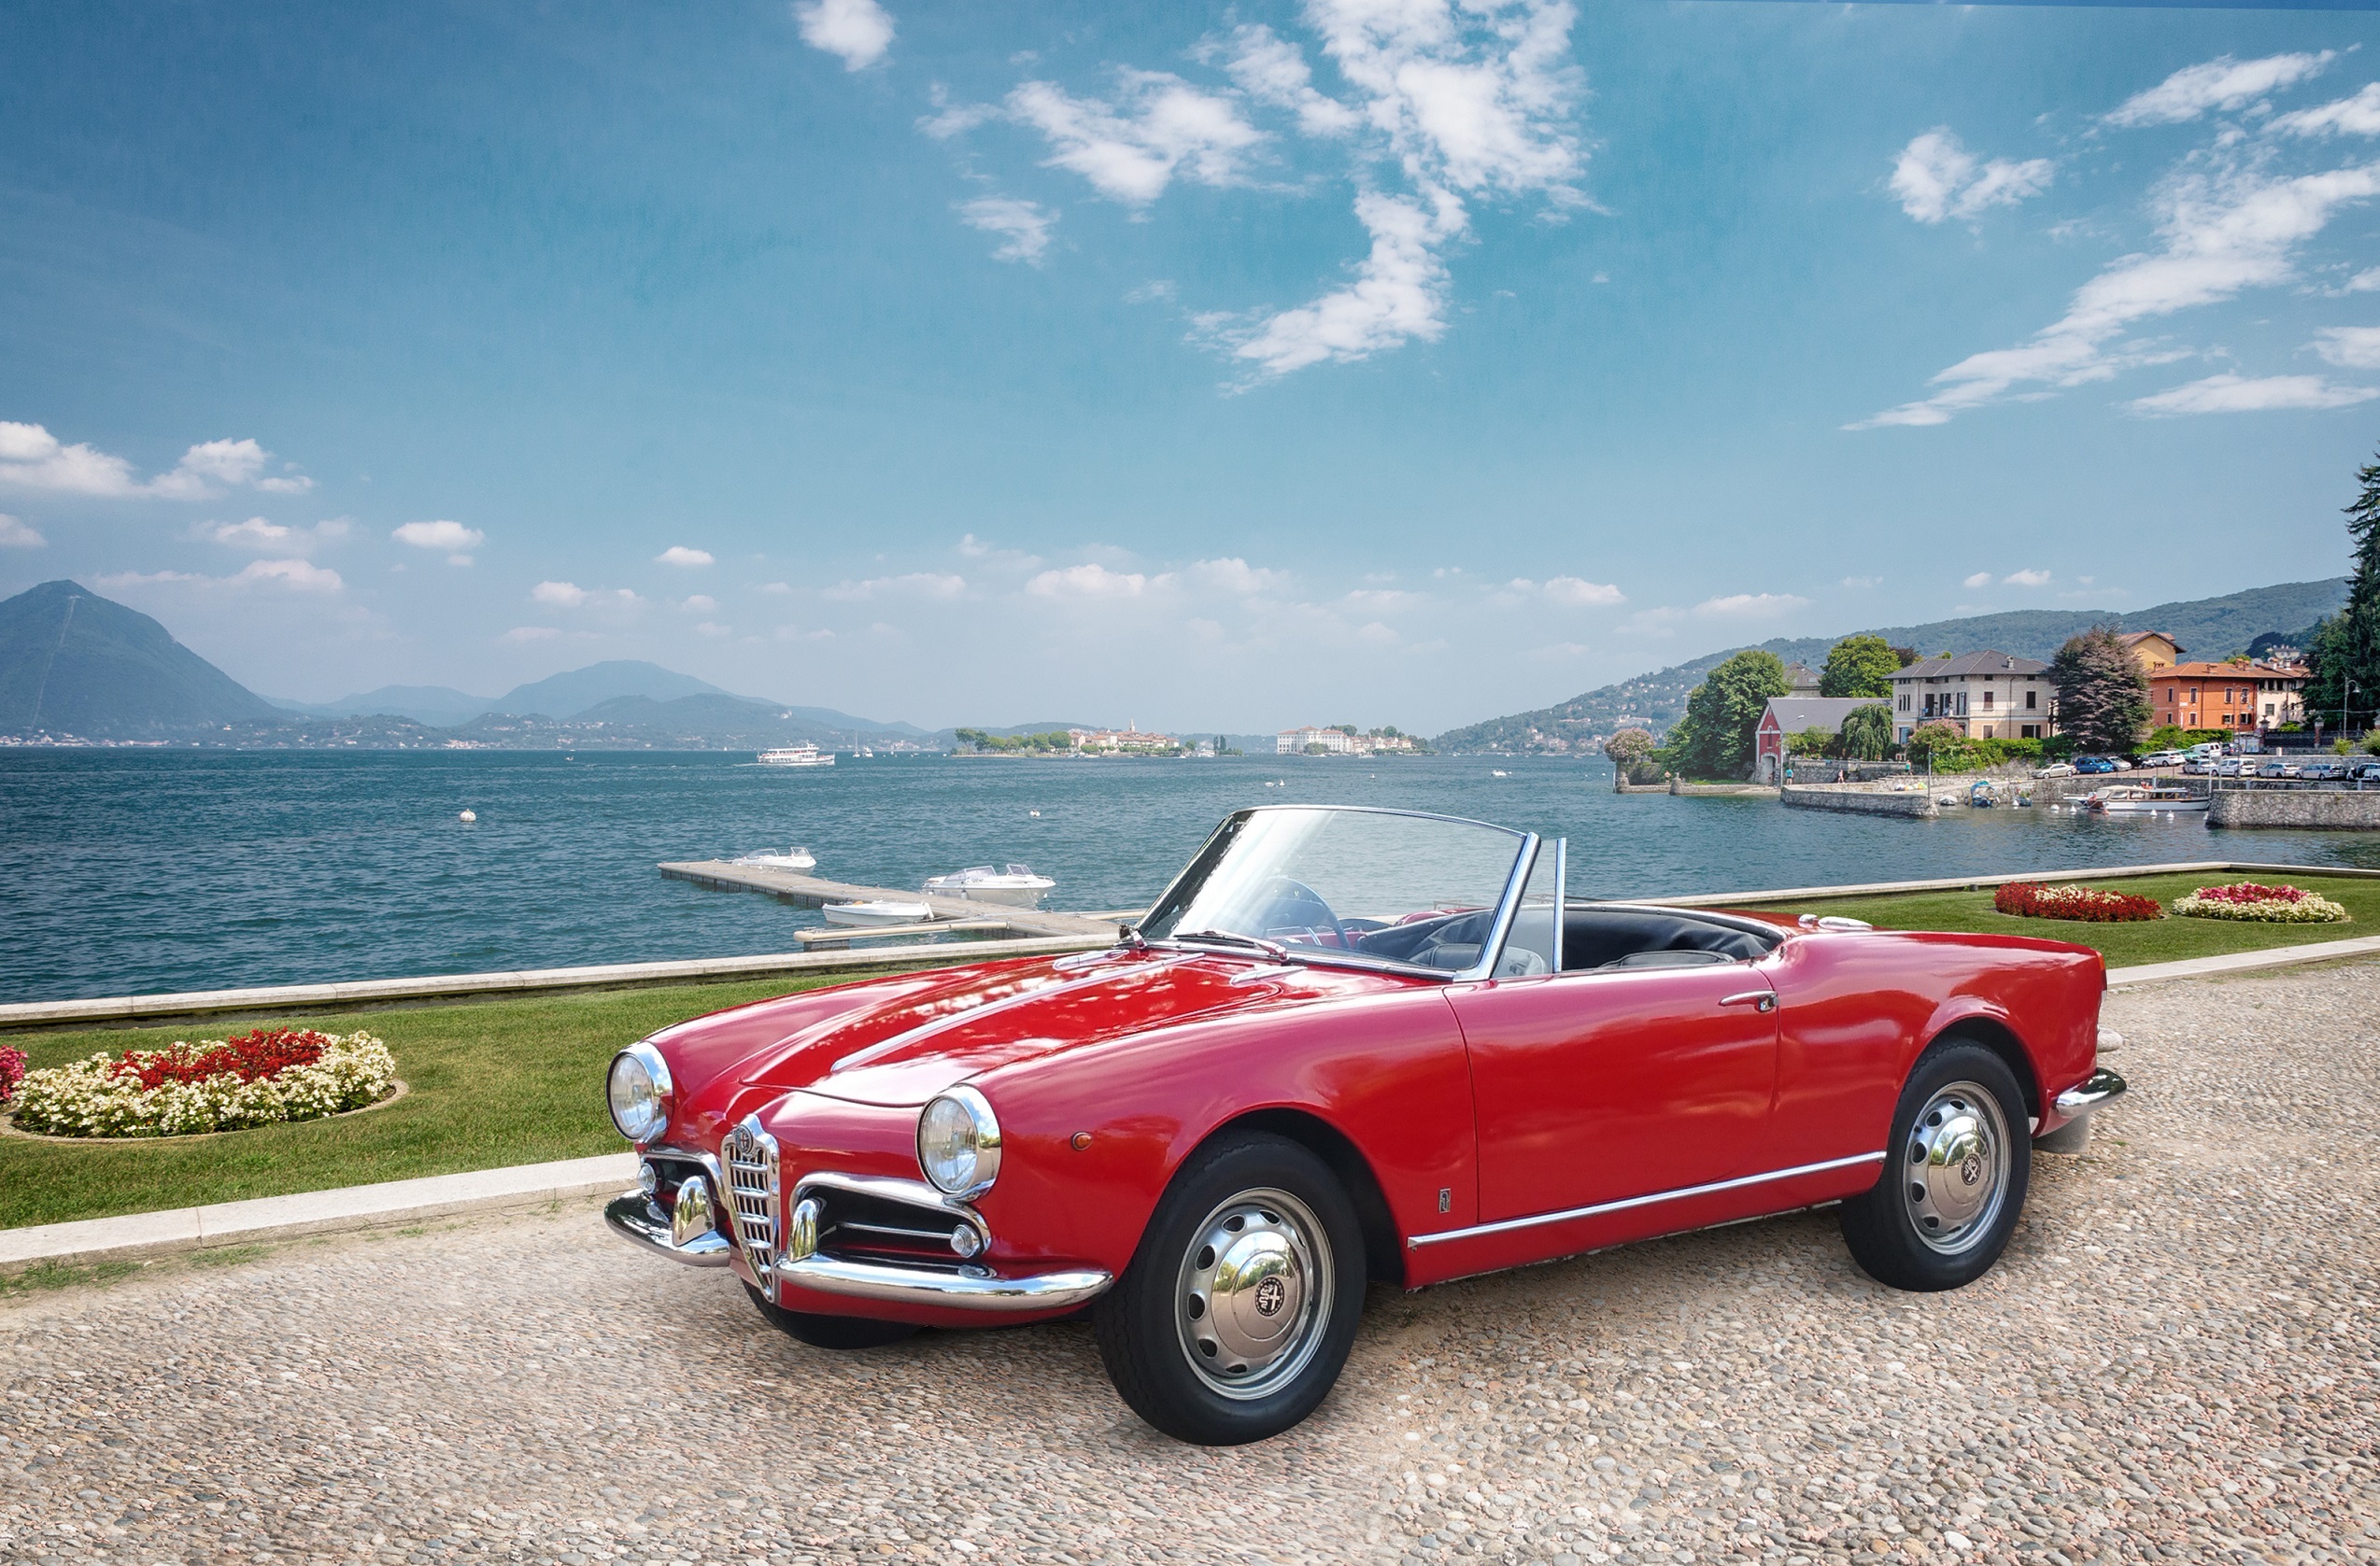 Vintage Alfa Romeo Sports Car: Self-drive Tours Experience